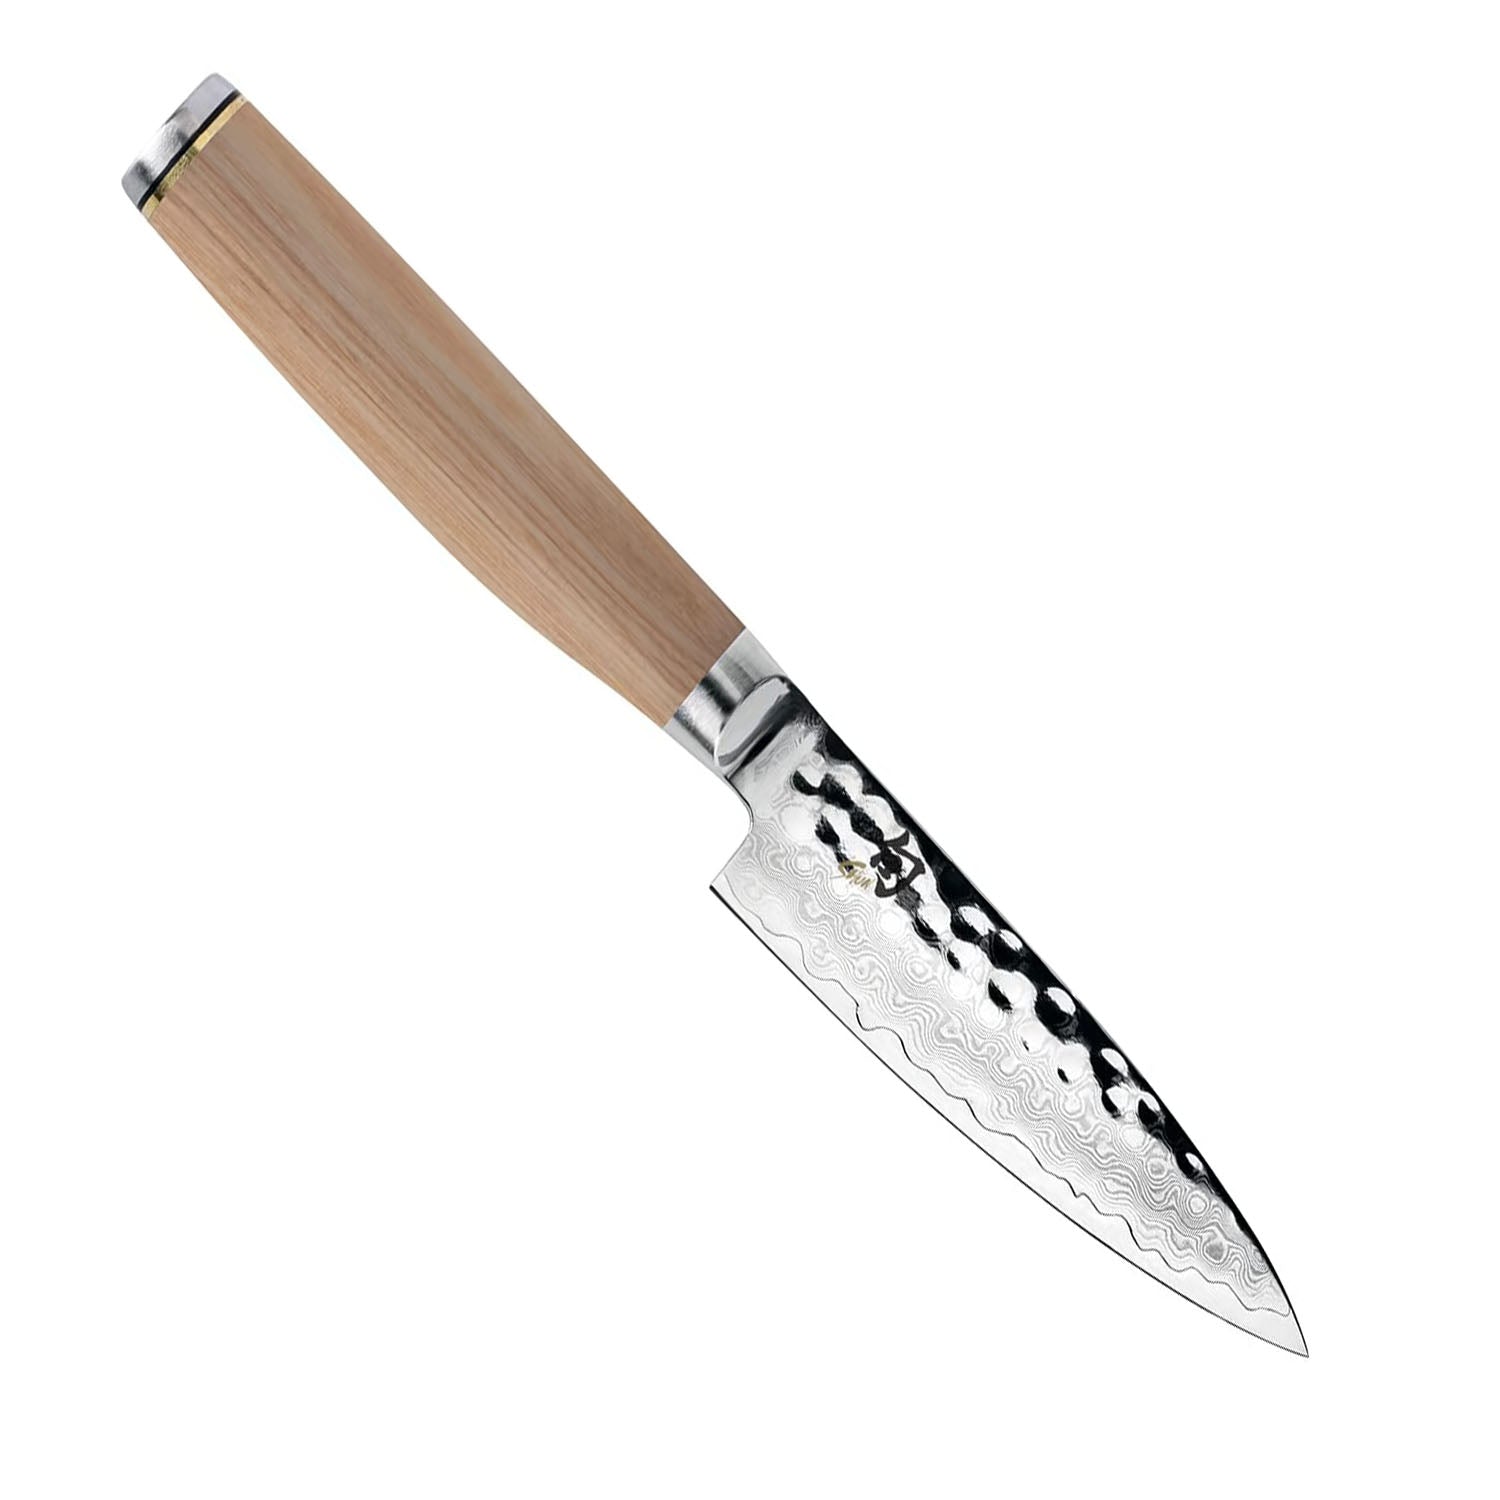 Food + Produce Knife: 4 Inch Blade